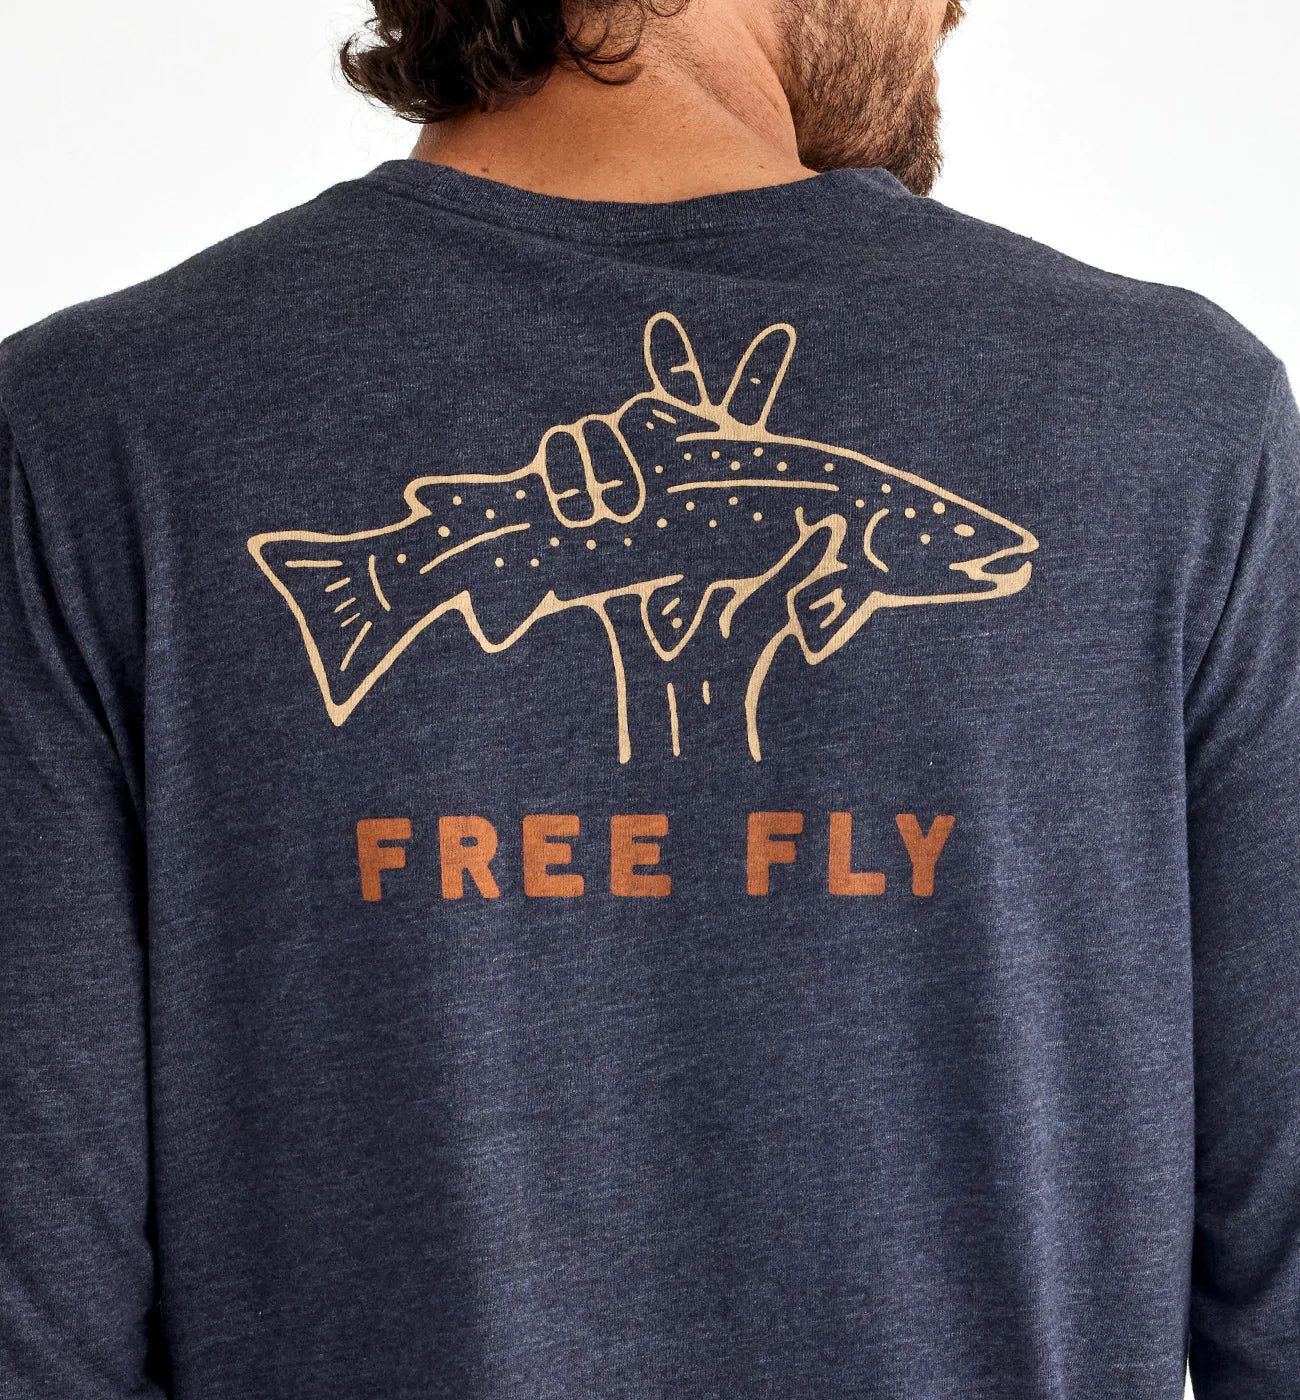 Fly Life, Trout Fishing Shirt, Fly Fishing Gift, Fly Fishing T-Shirt